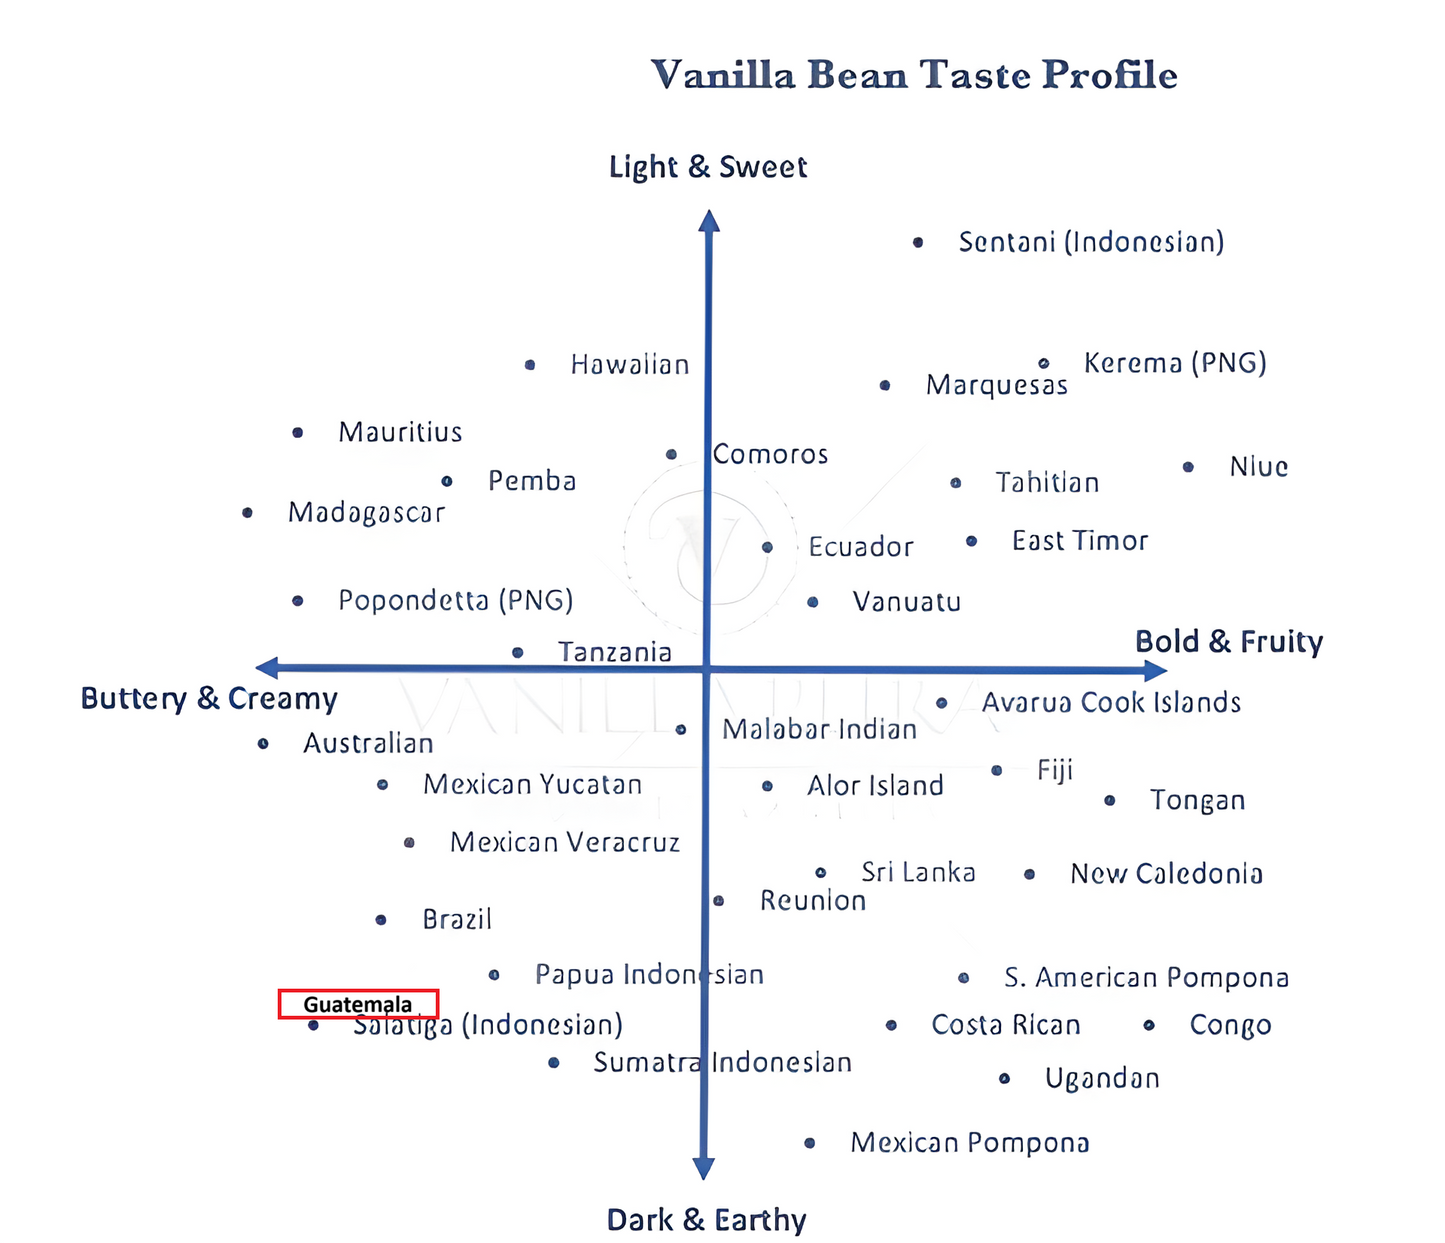 [WITH BEANS] Pure All-Natural Rare GUATEMALAN Single-Origin Vanilla Extract